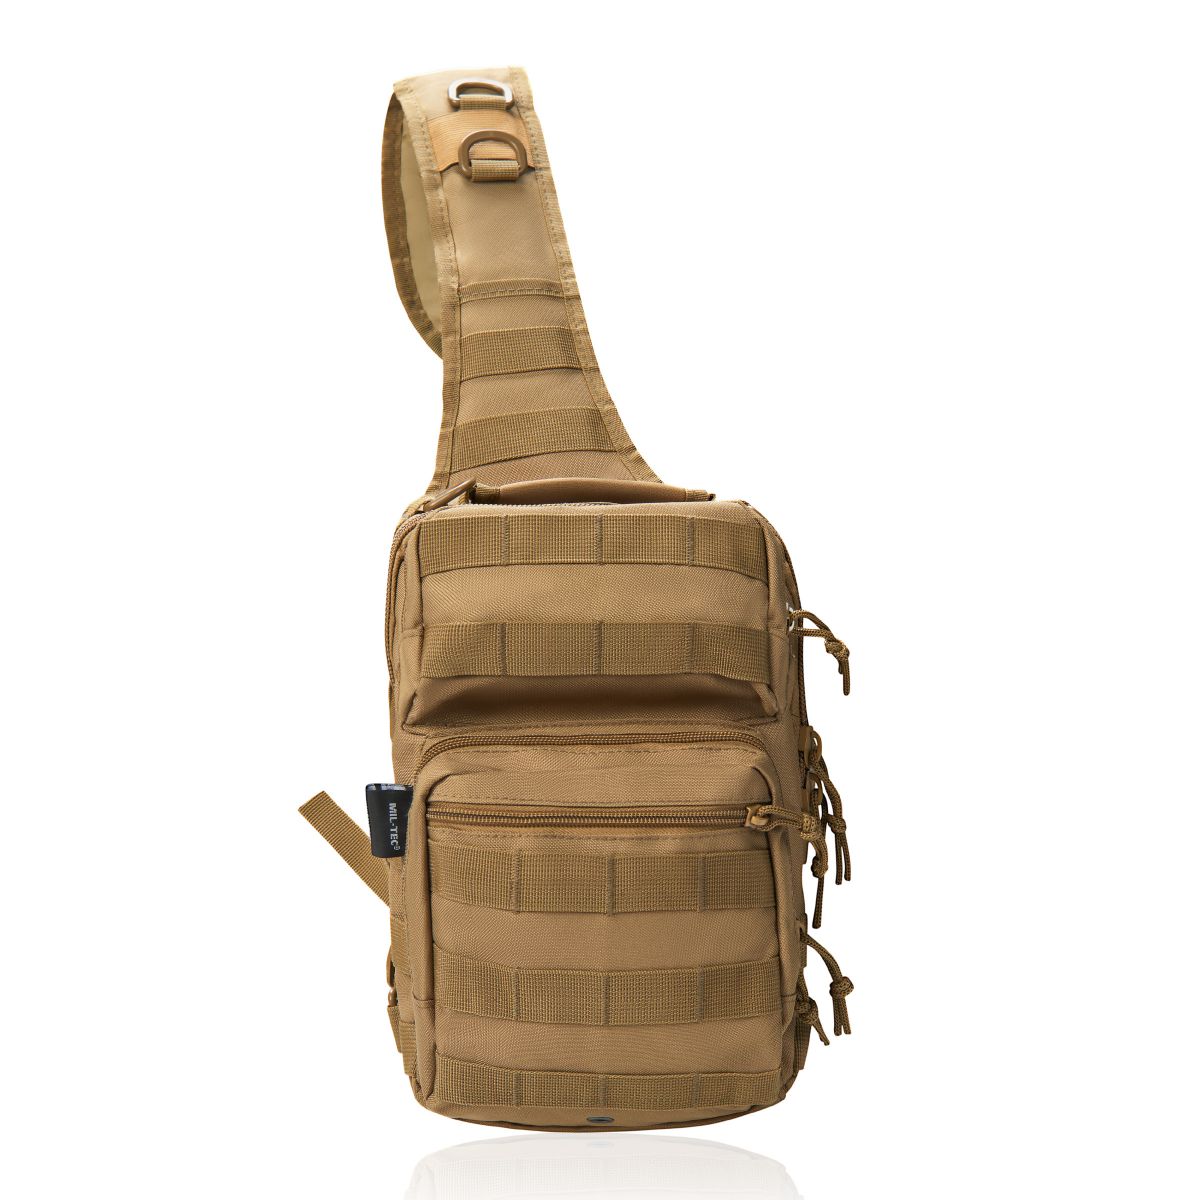 Рюкзак однолямочный Mil-Tec “One strap assault pack”. Койот. 2